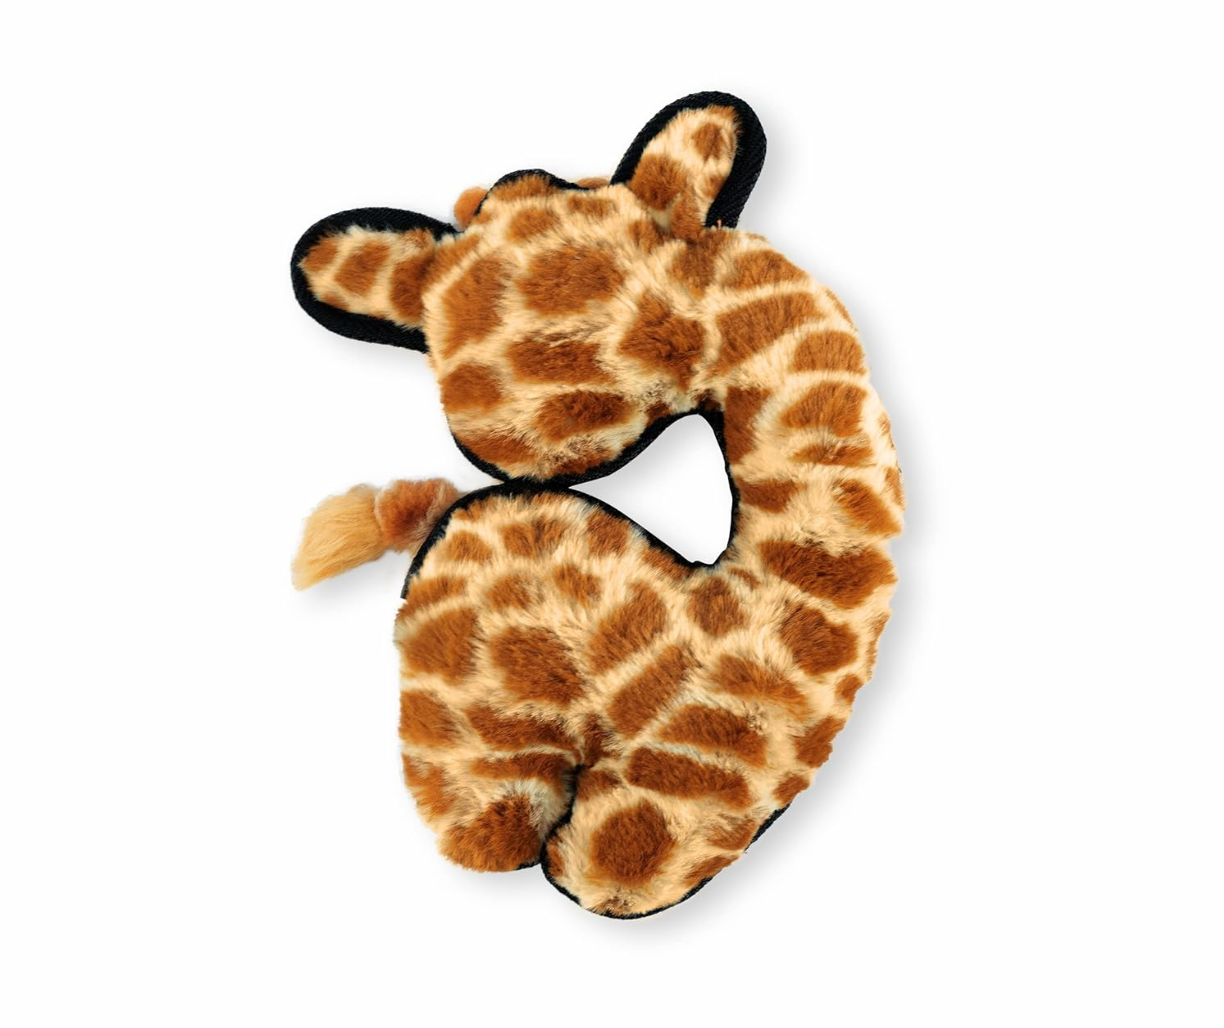 Safari Line Giraffe | Plush Squeaky Dog Toy